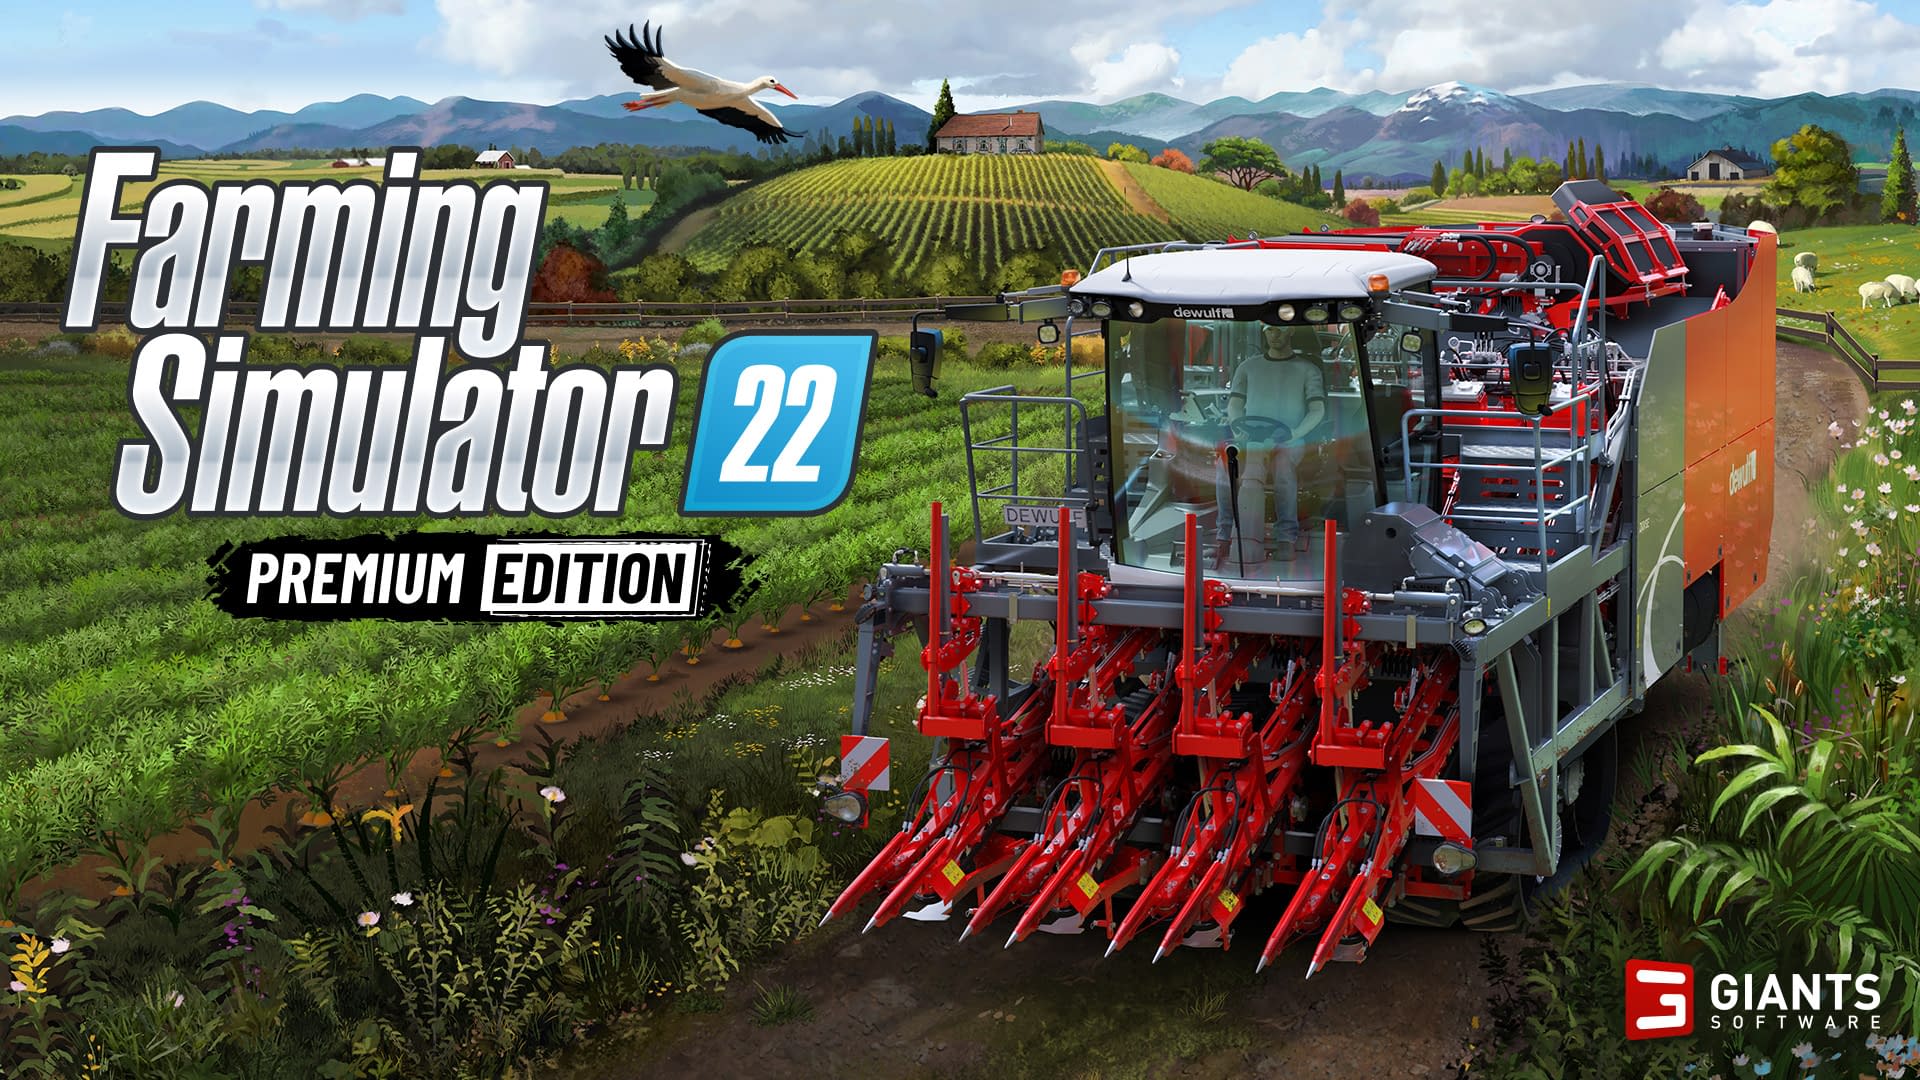 Farming Simulator 22 Trailer Has Loads of Farming Equipment in the